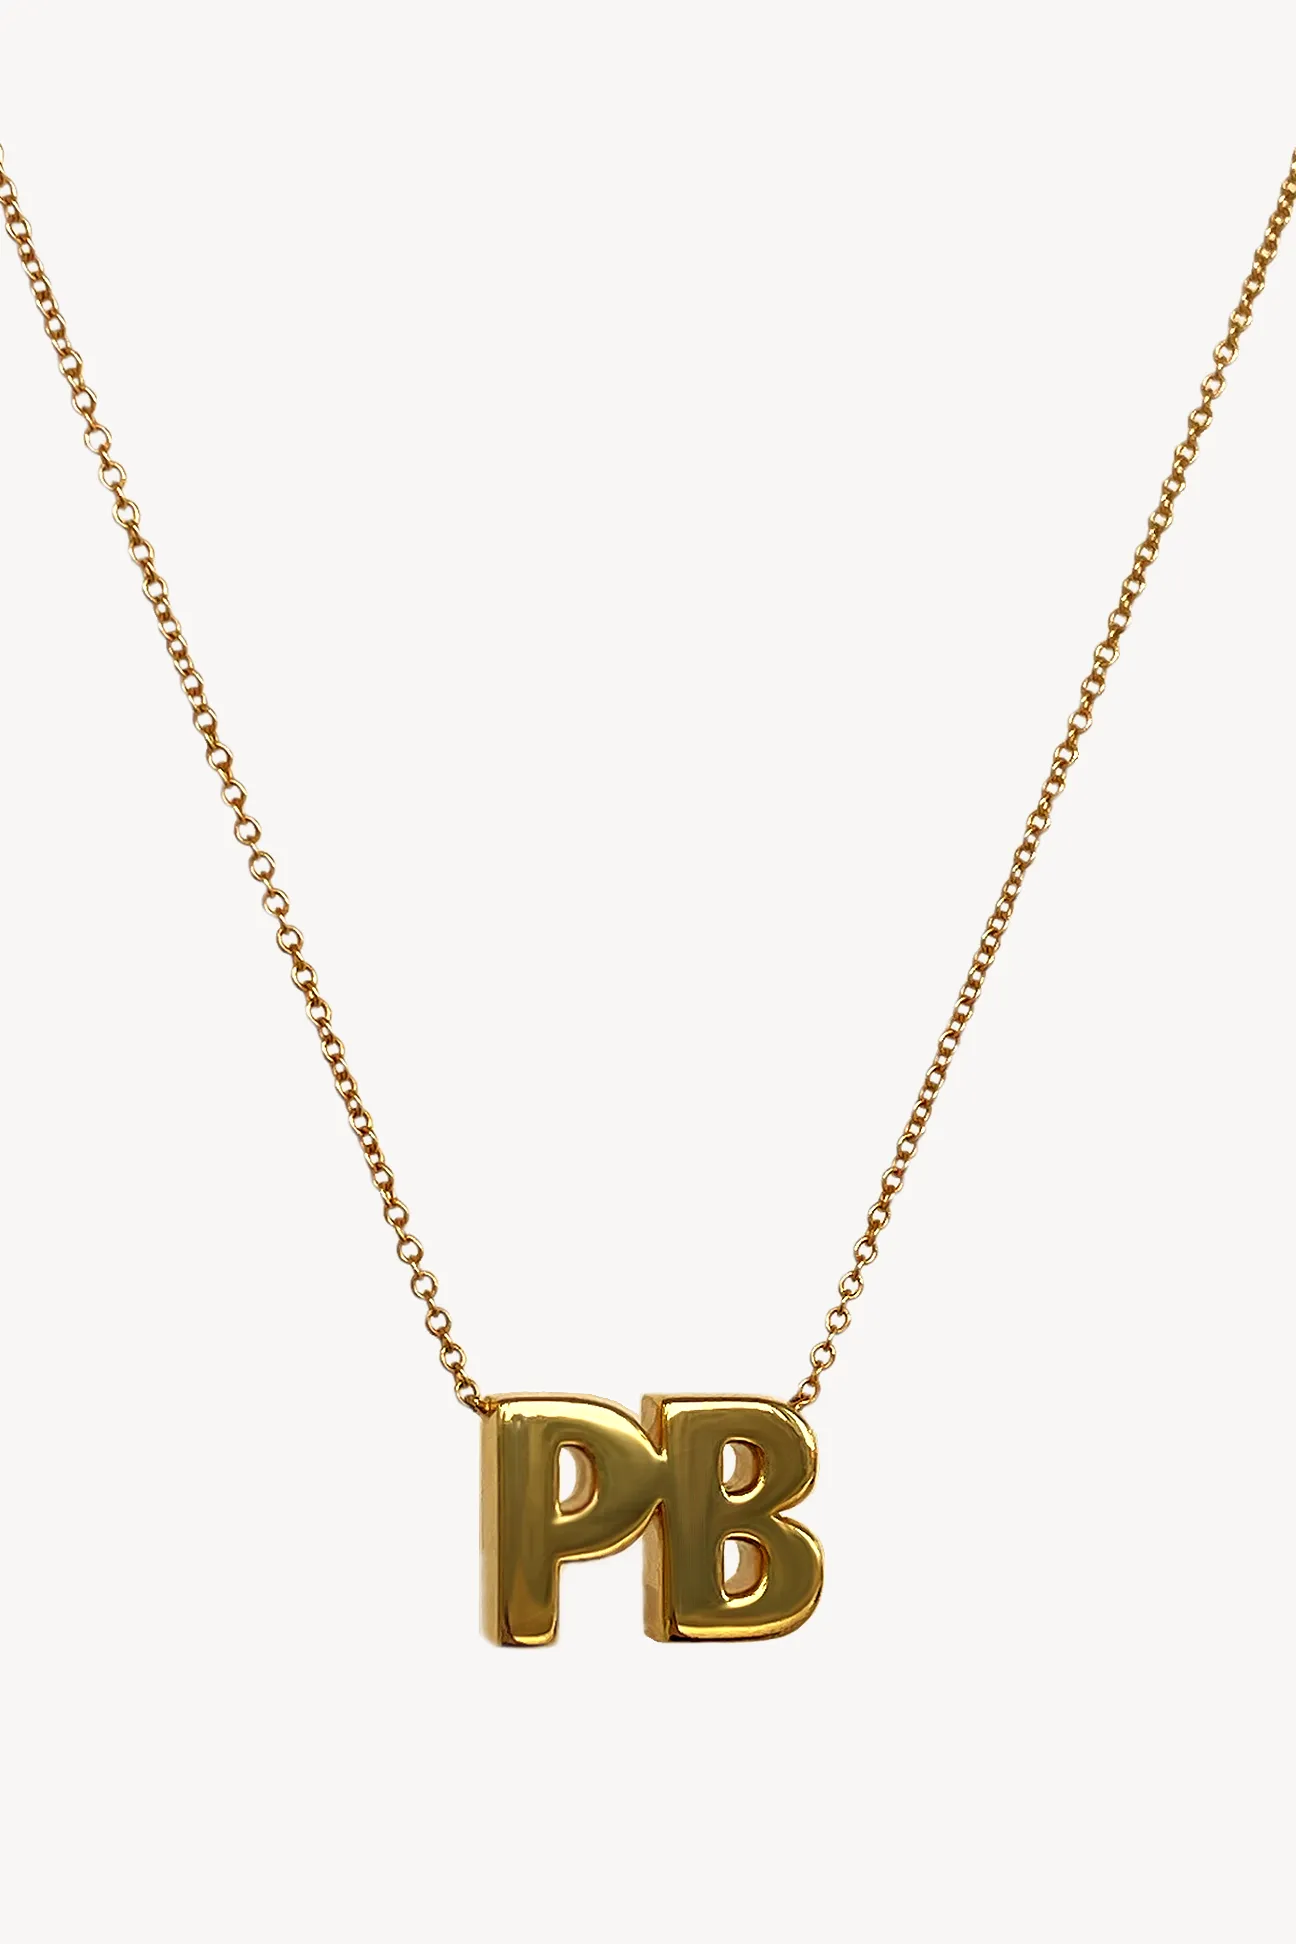 PB Gold Chain